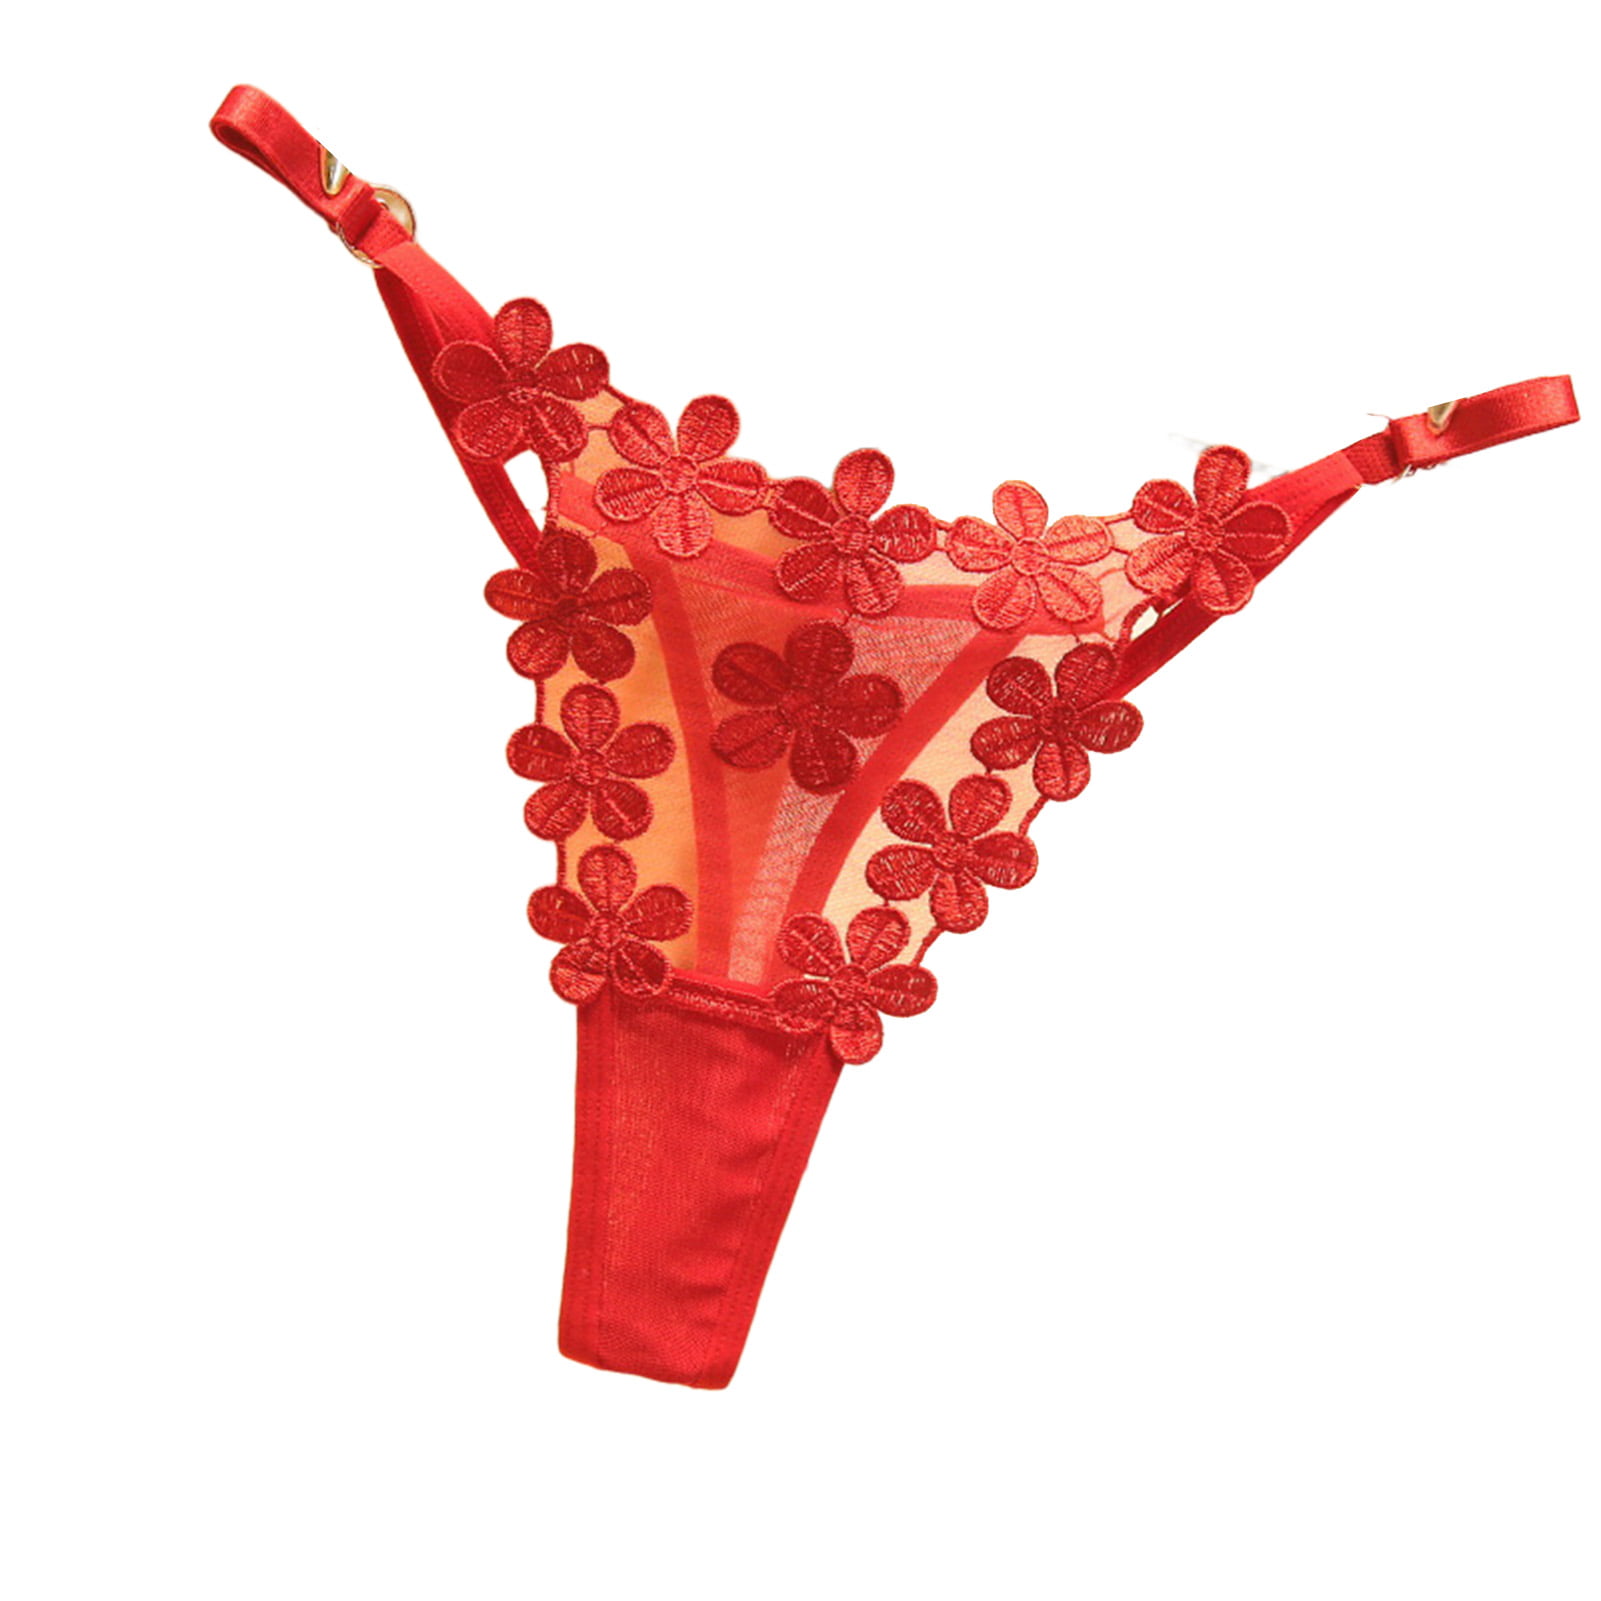 Womens Sexy Red G-String Thong Panties Underwear Under Wear